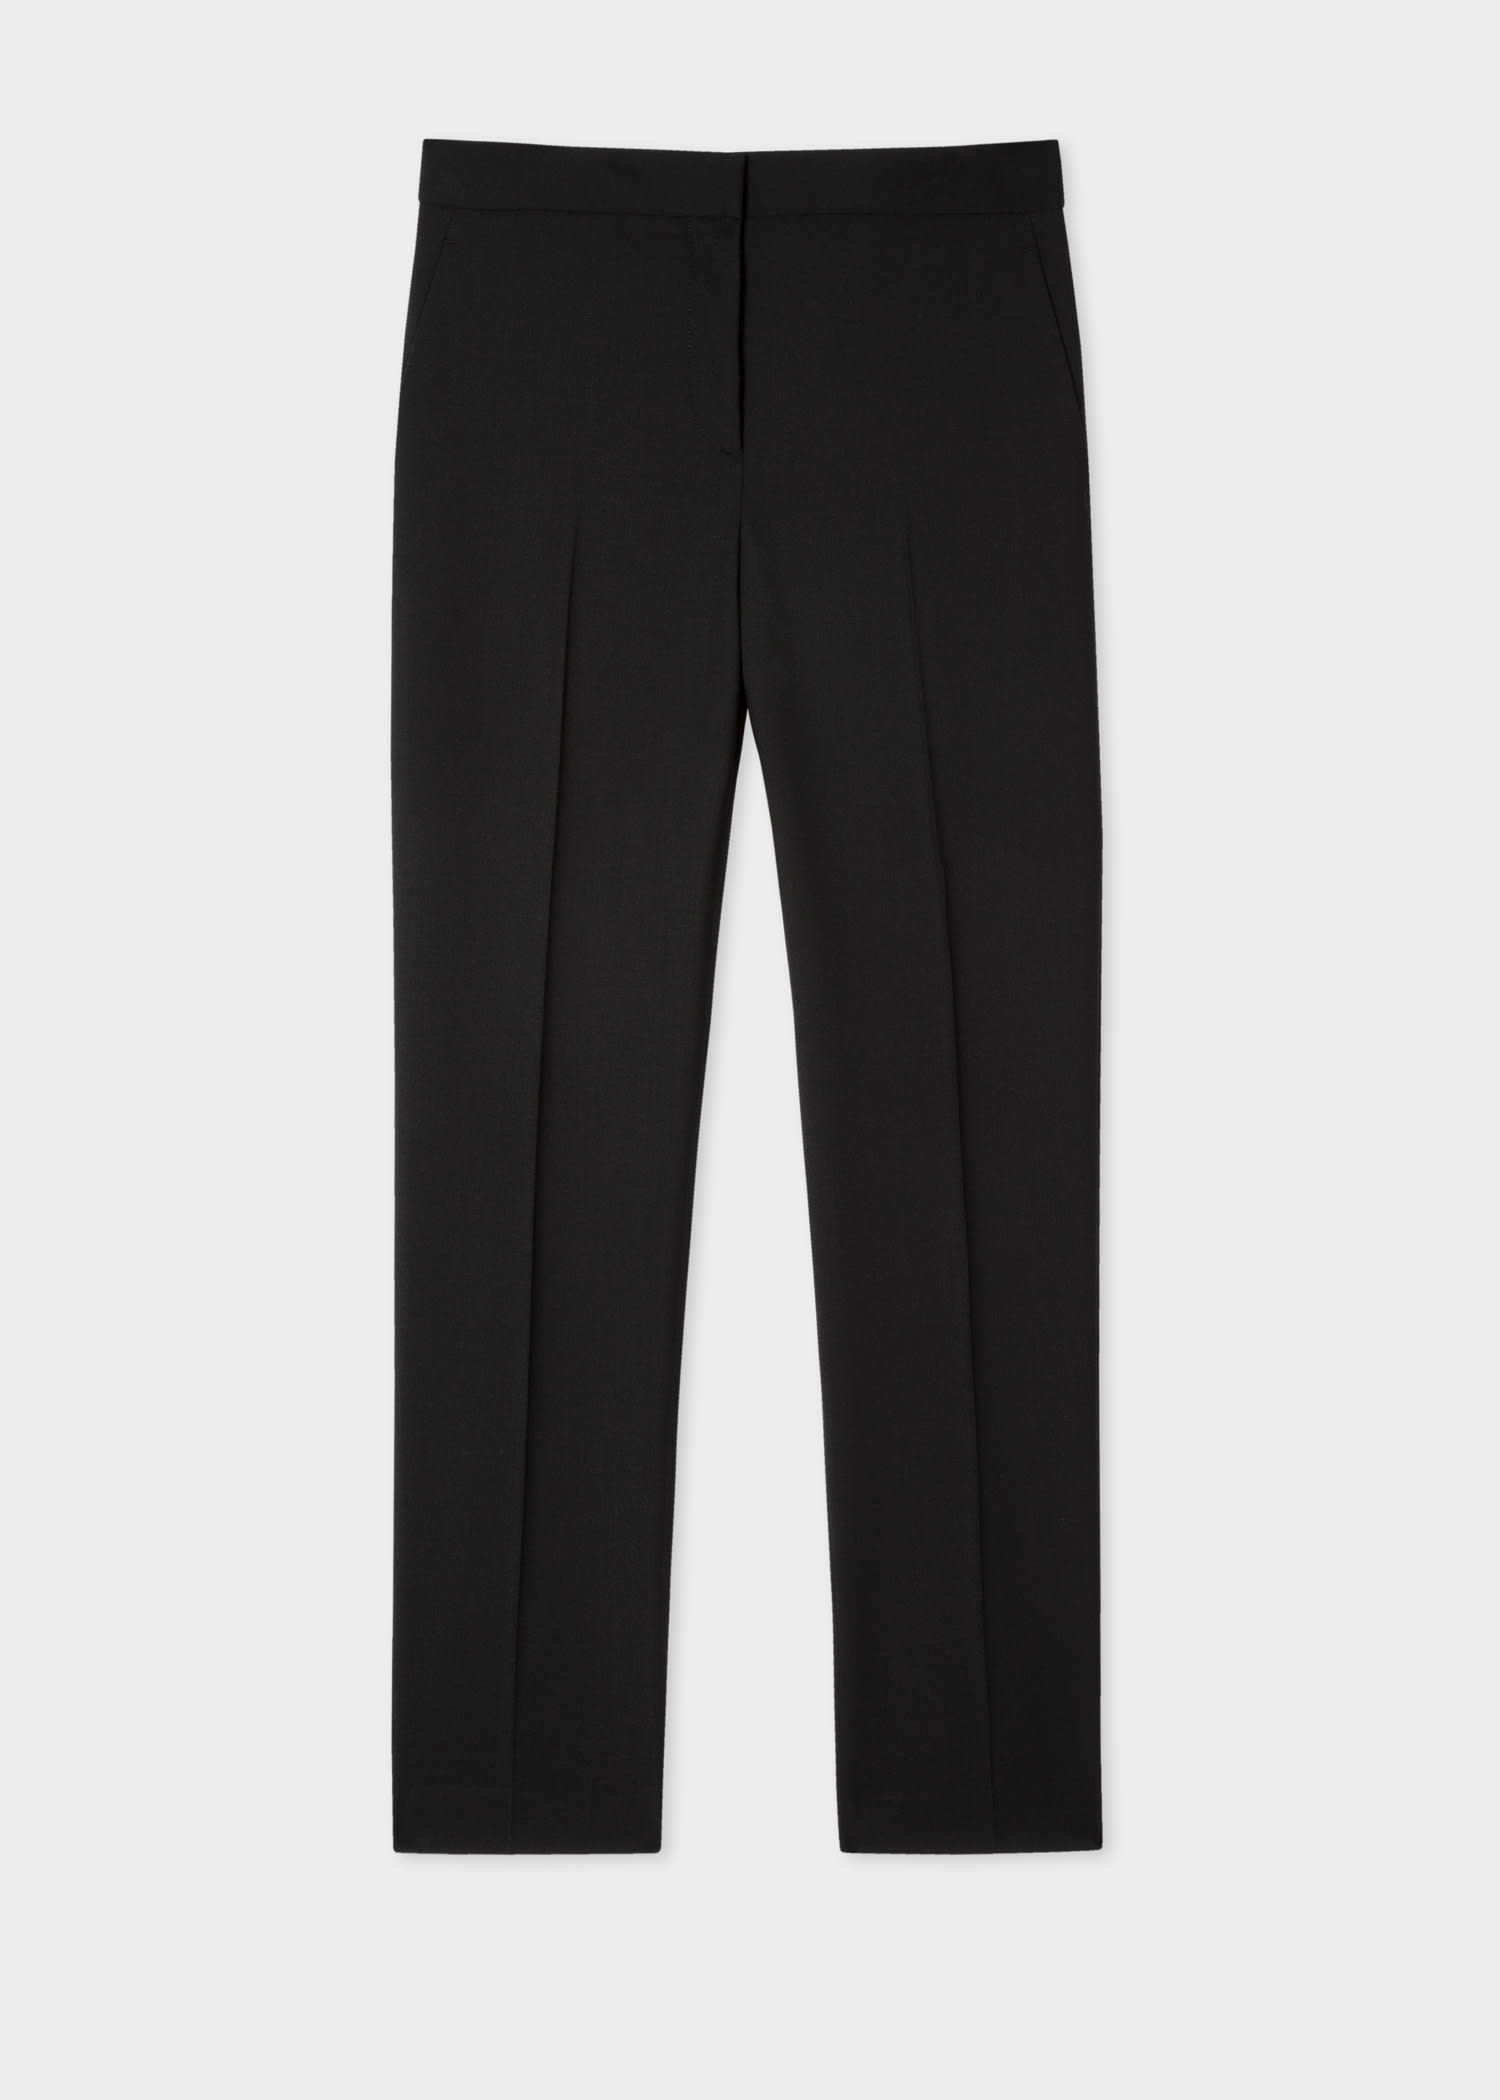 Women's Designer Suits | Check & Pinstripe Trouser Suits - Paul Smith